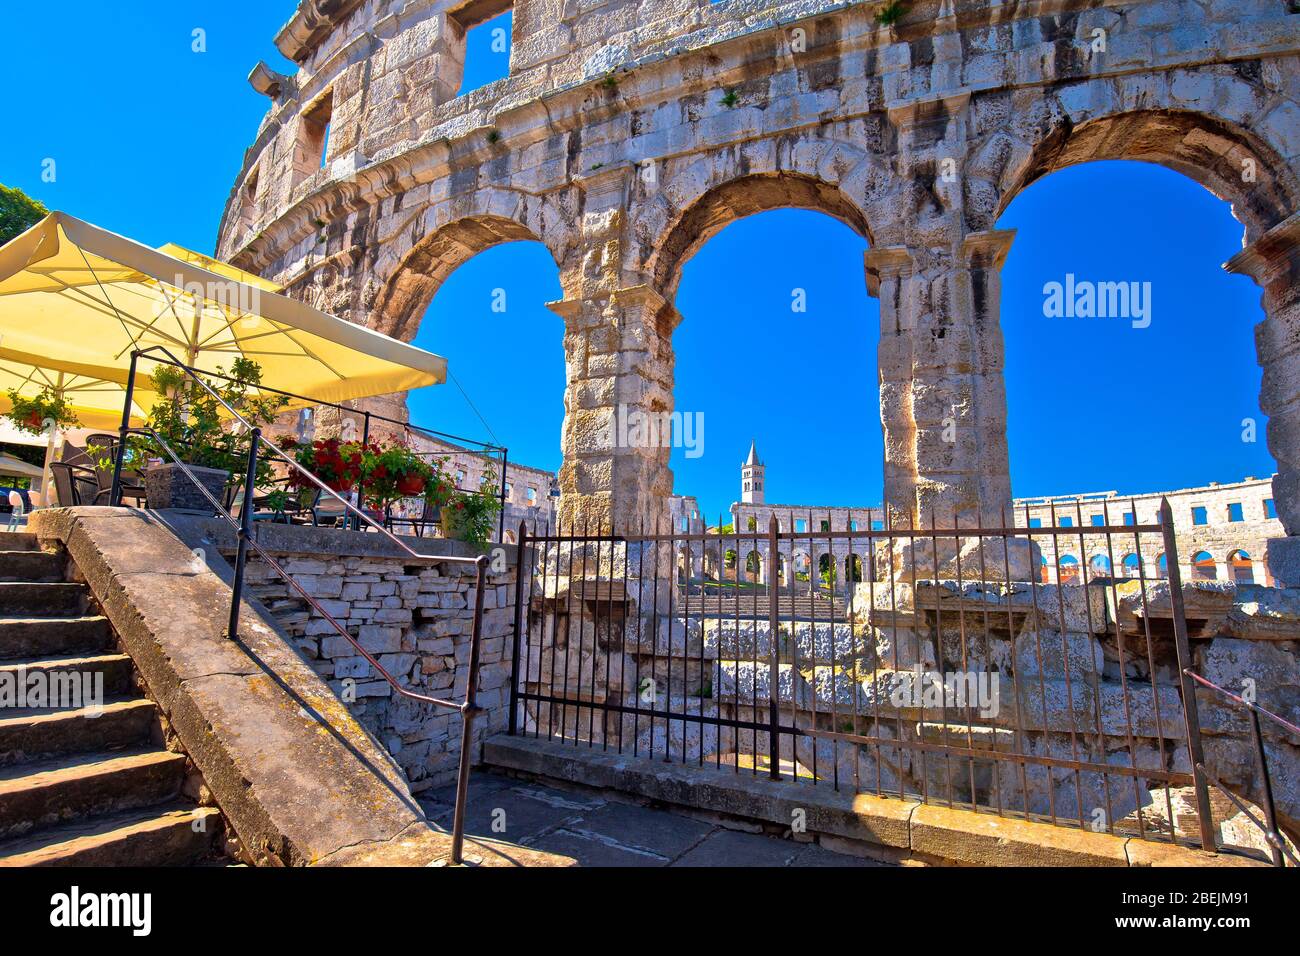 Arena Pula historic Roman amphitheater ruins view, Istria region of Croatia Stock Photo